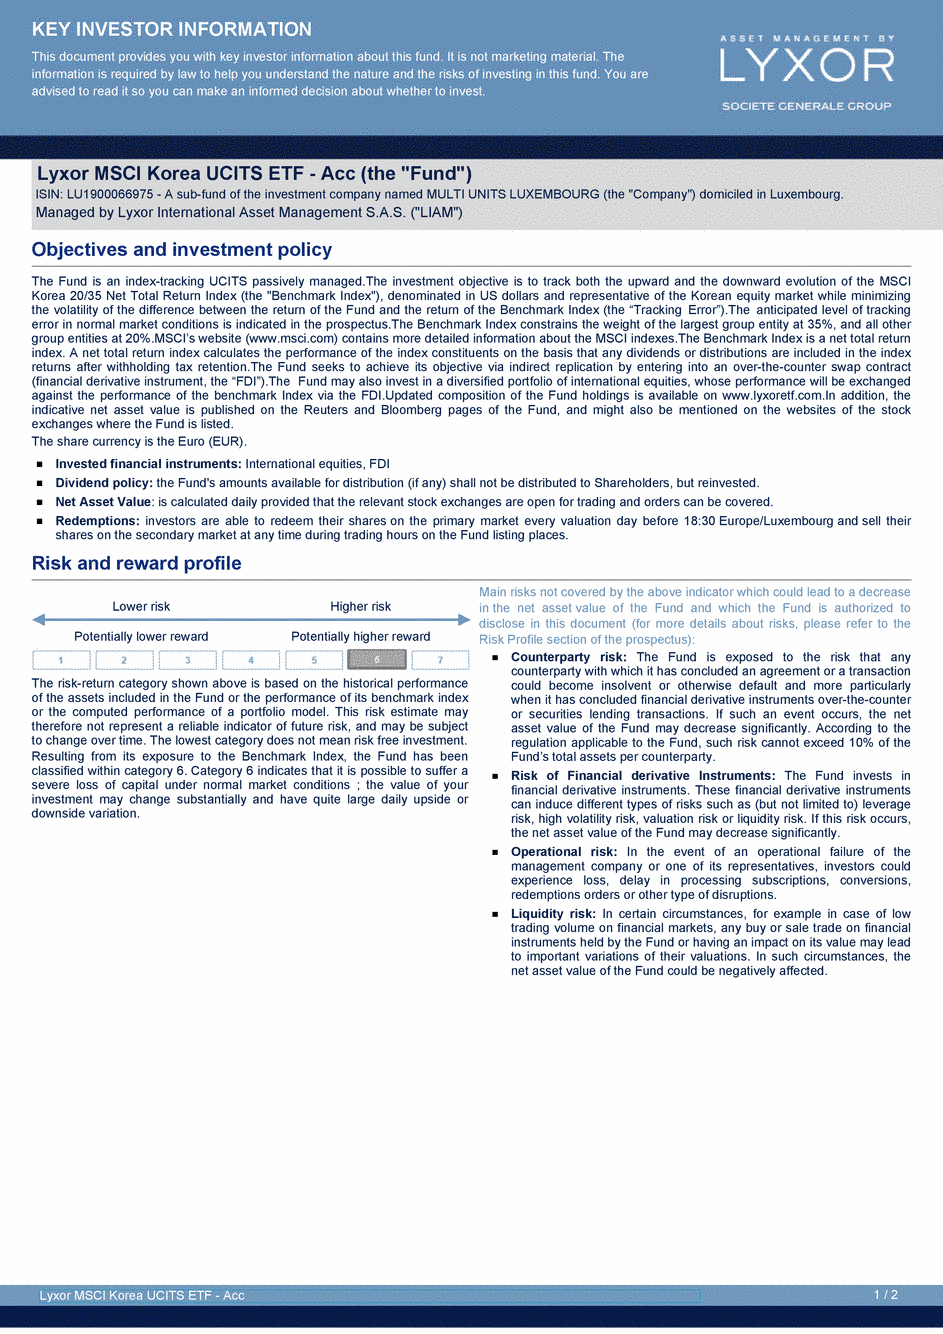 DICI Lyxor MSCI Korea UCITS ETF - Acc - 19/02/2021 - Anglais